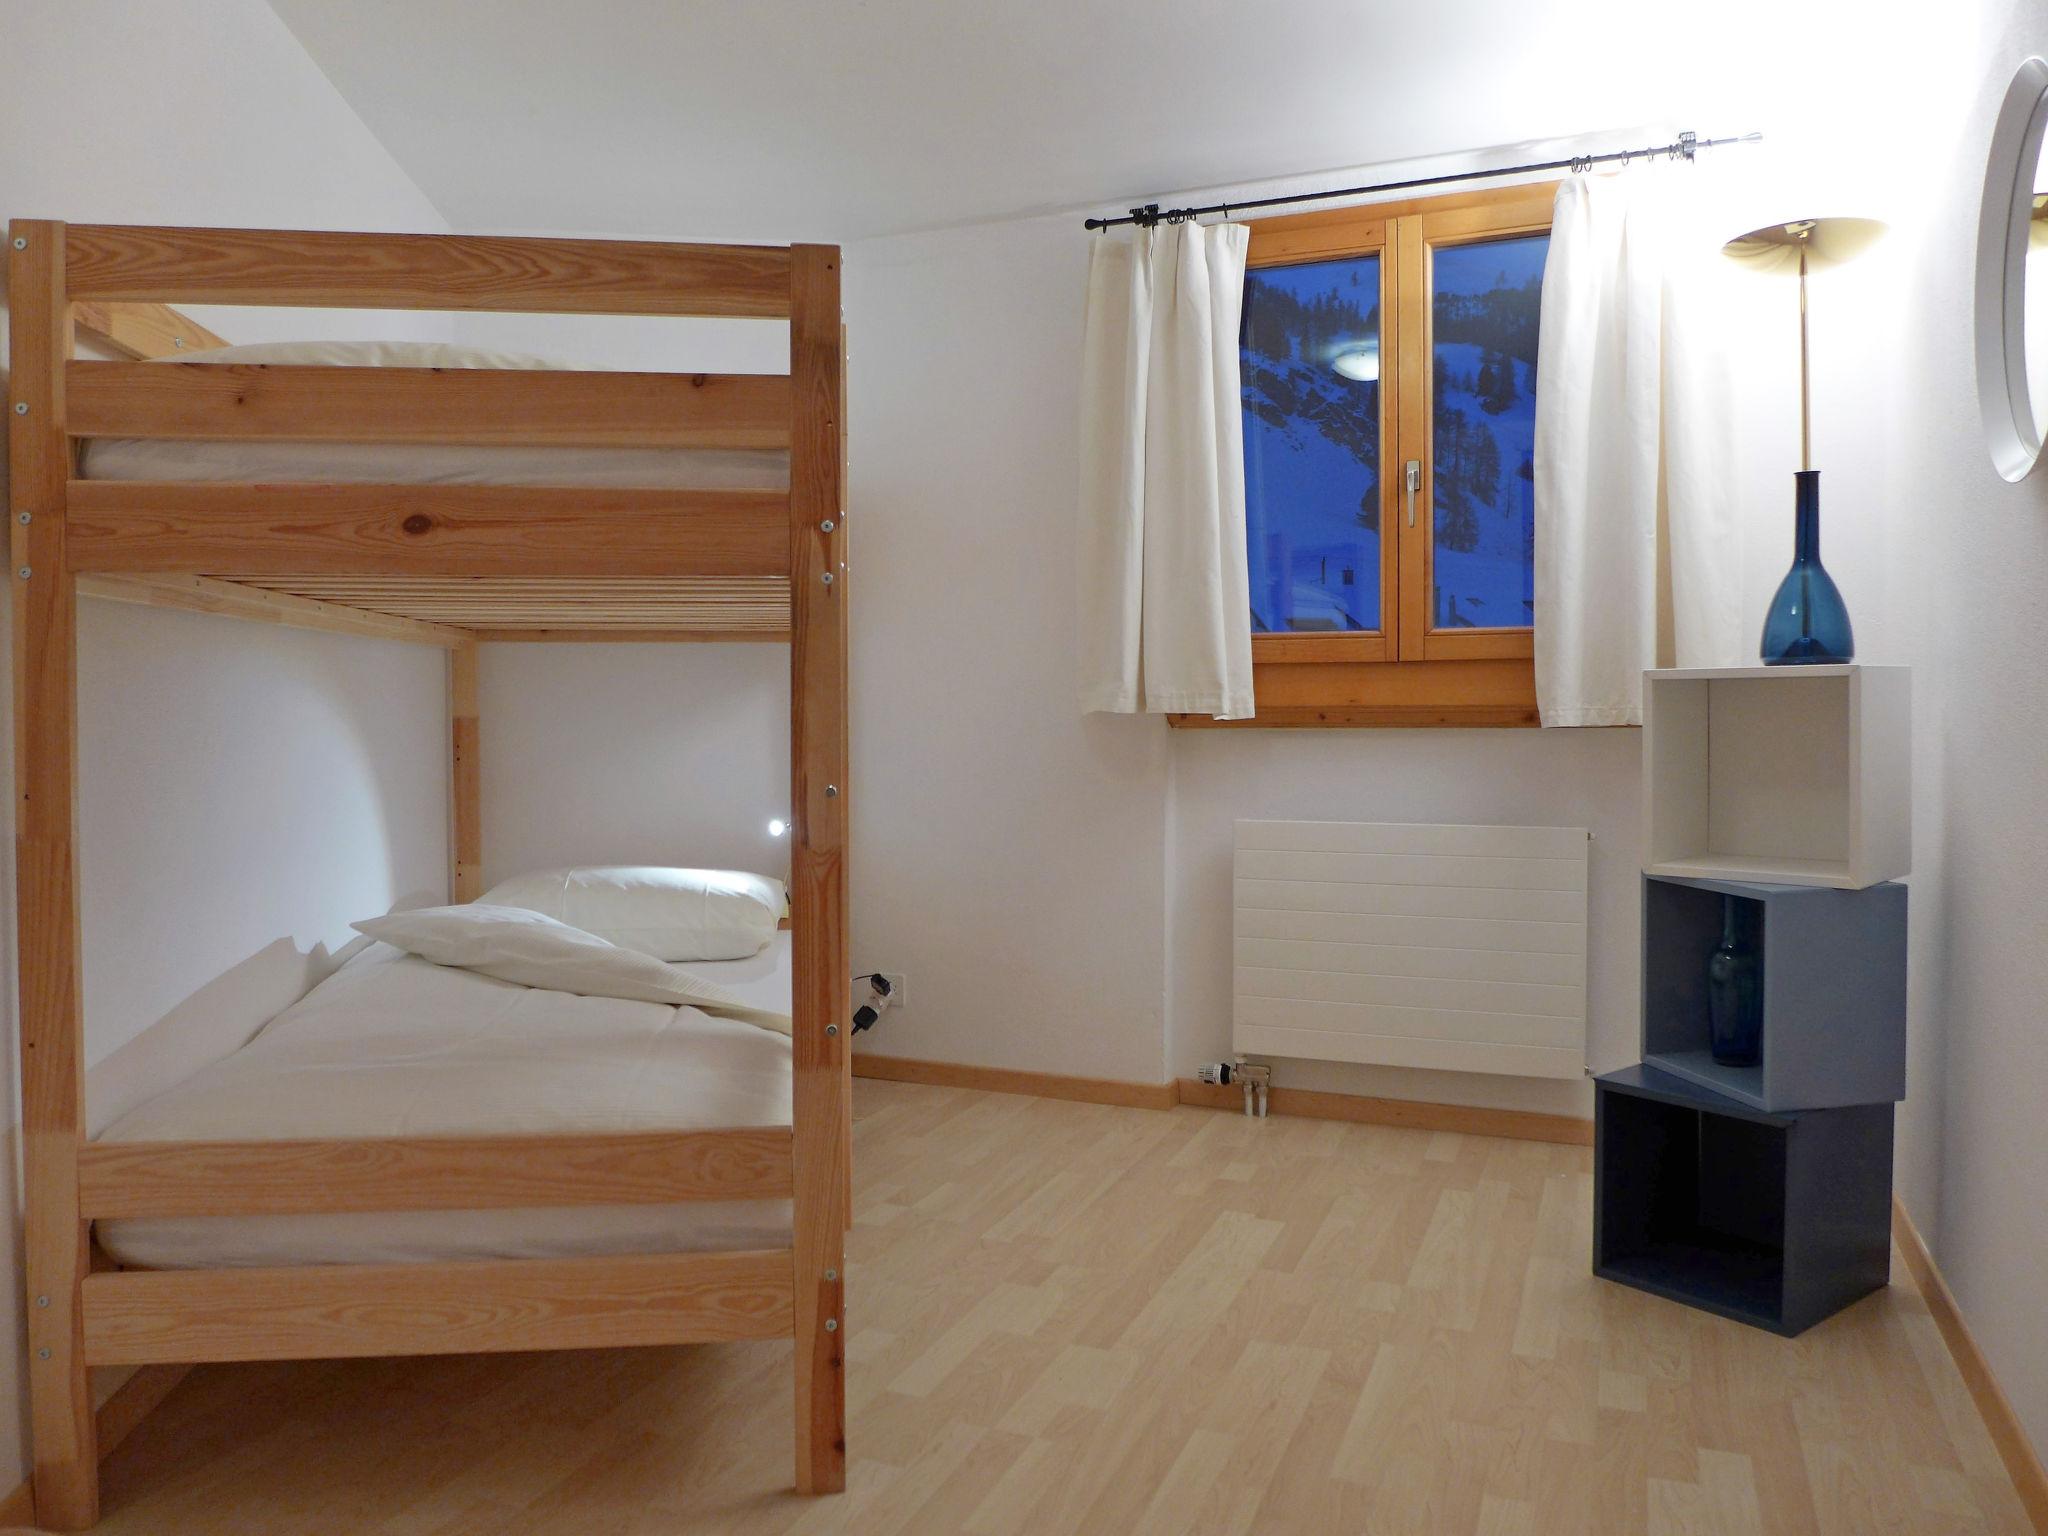 Photo 16 - 3 bedroom Apartment in Celerina/Schlarigna with mountain view